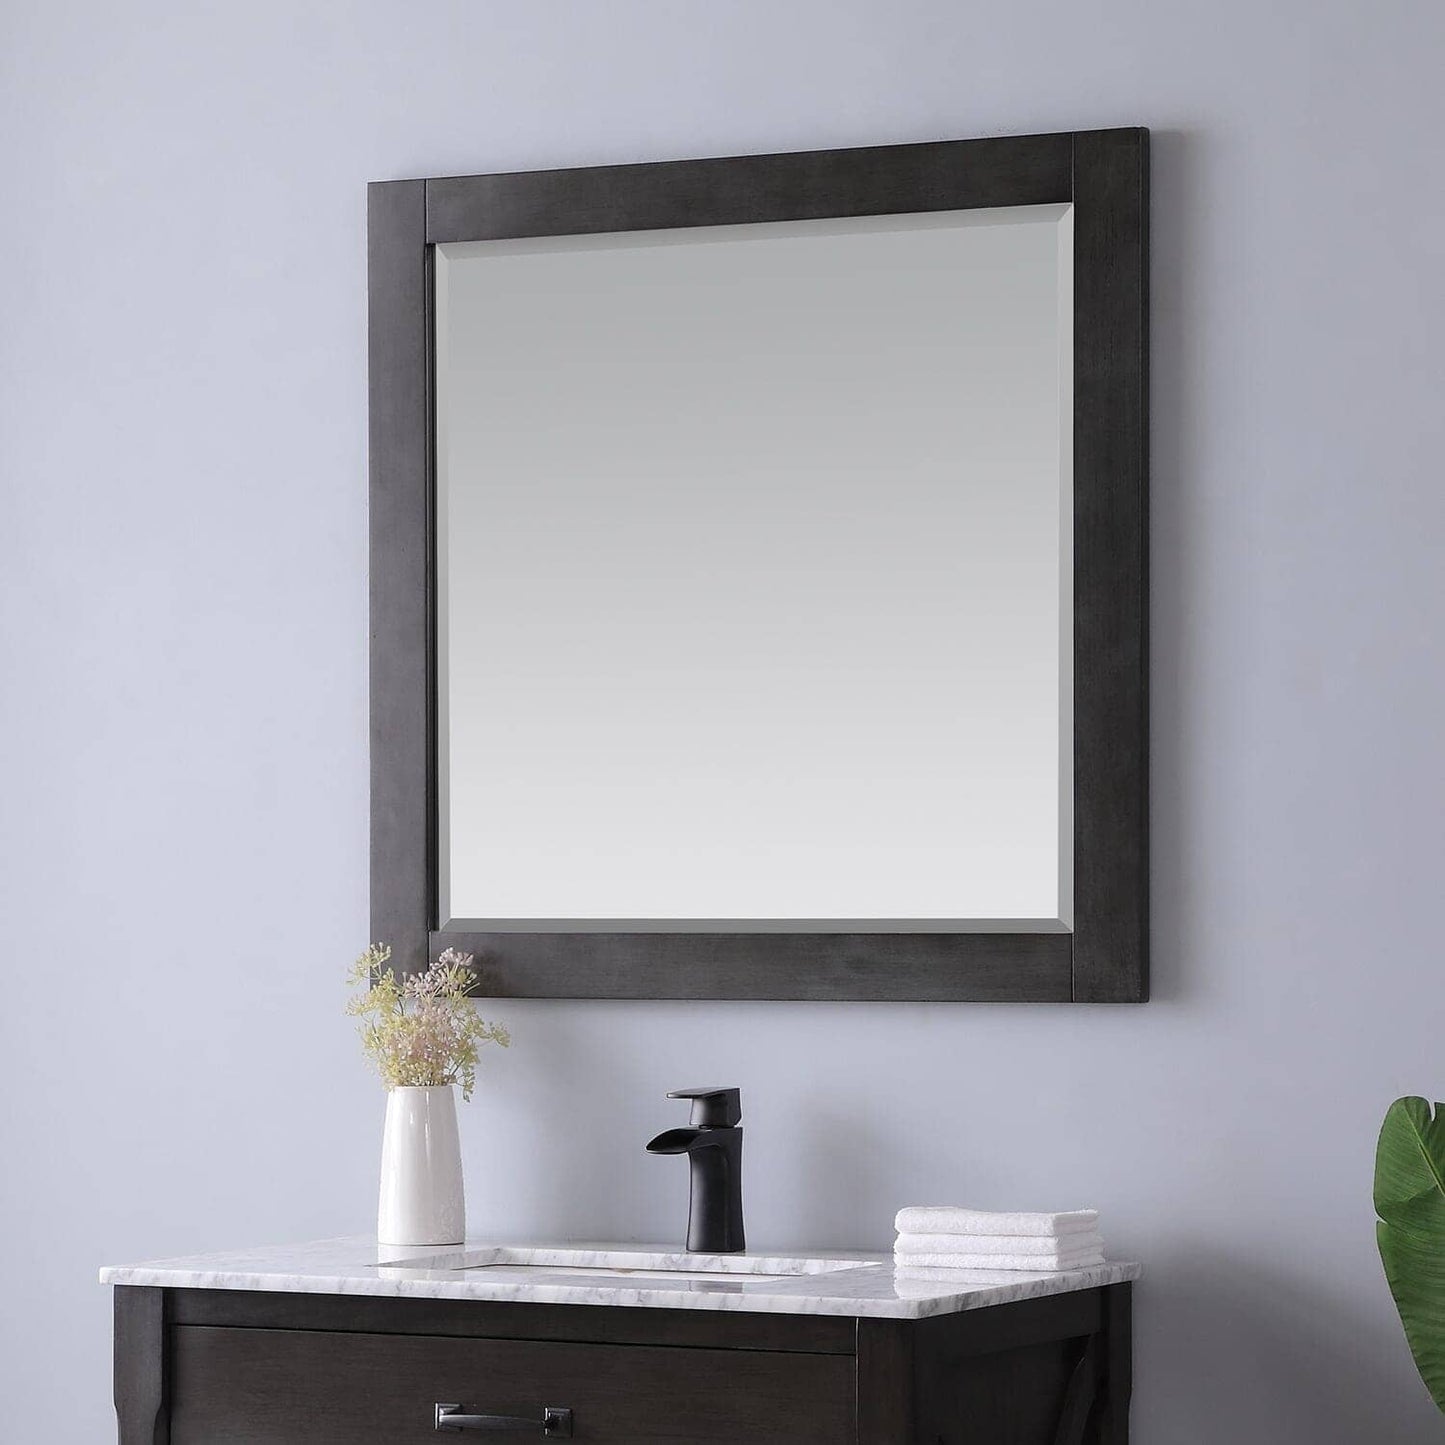 Bathroom Mirror - Altair Maribella 34W x 36H - 535030-MIR-RL